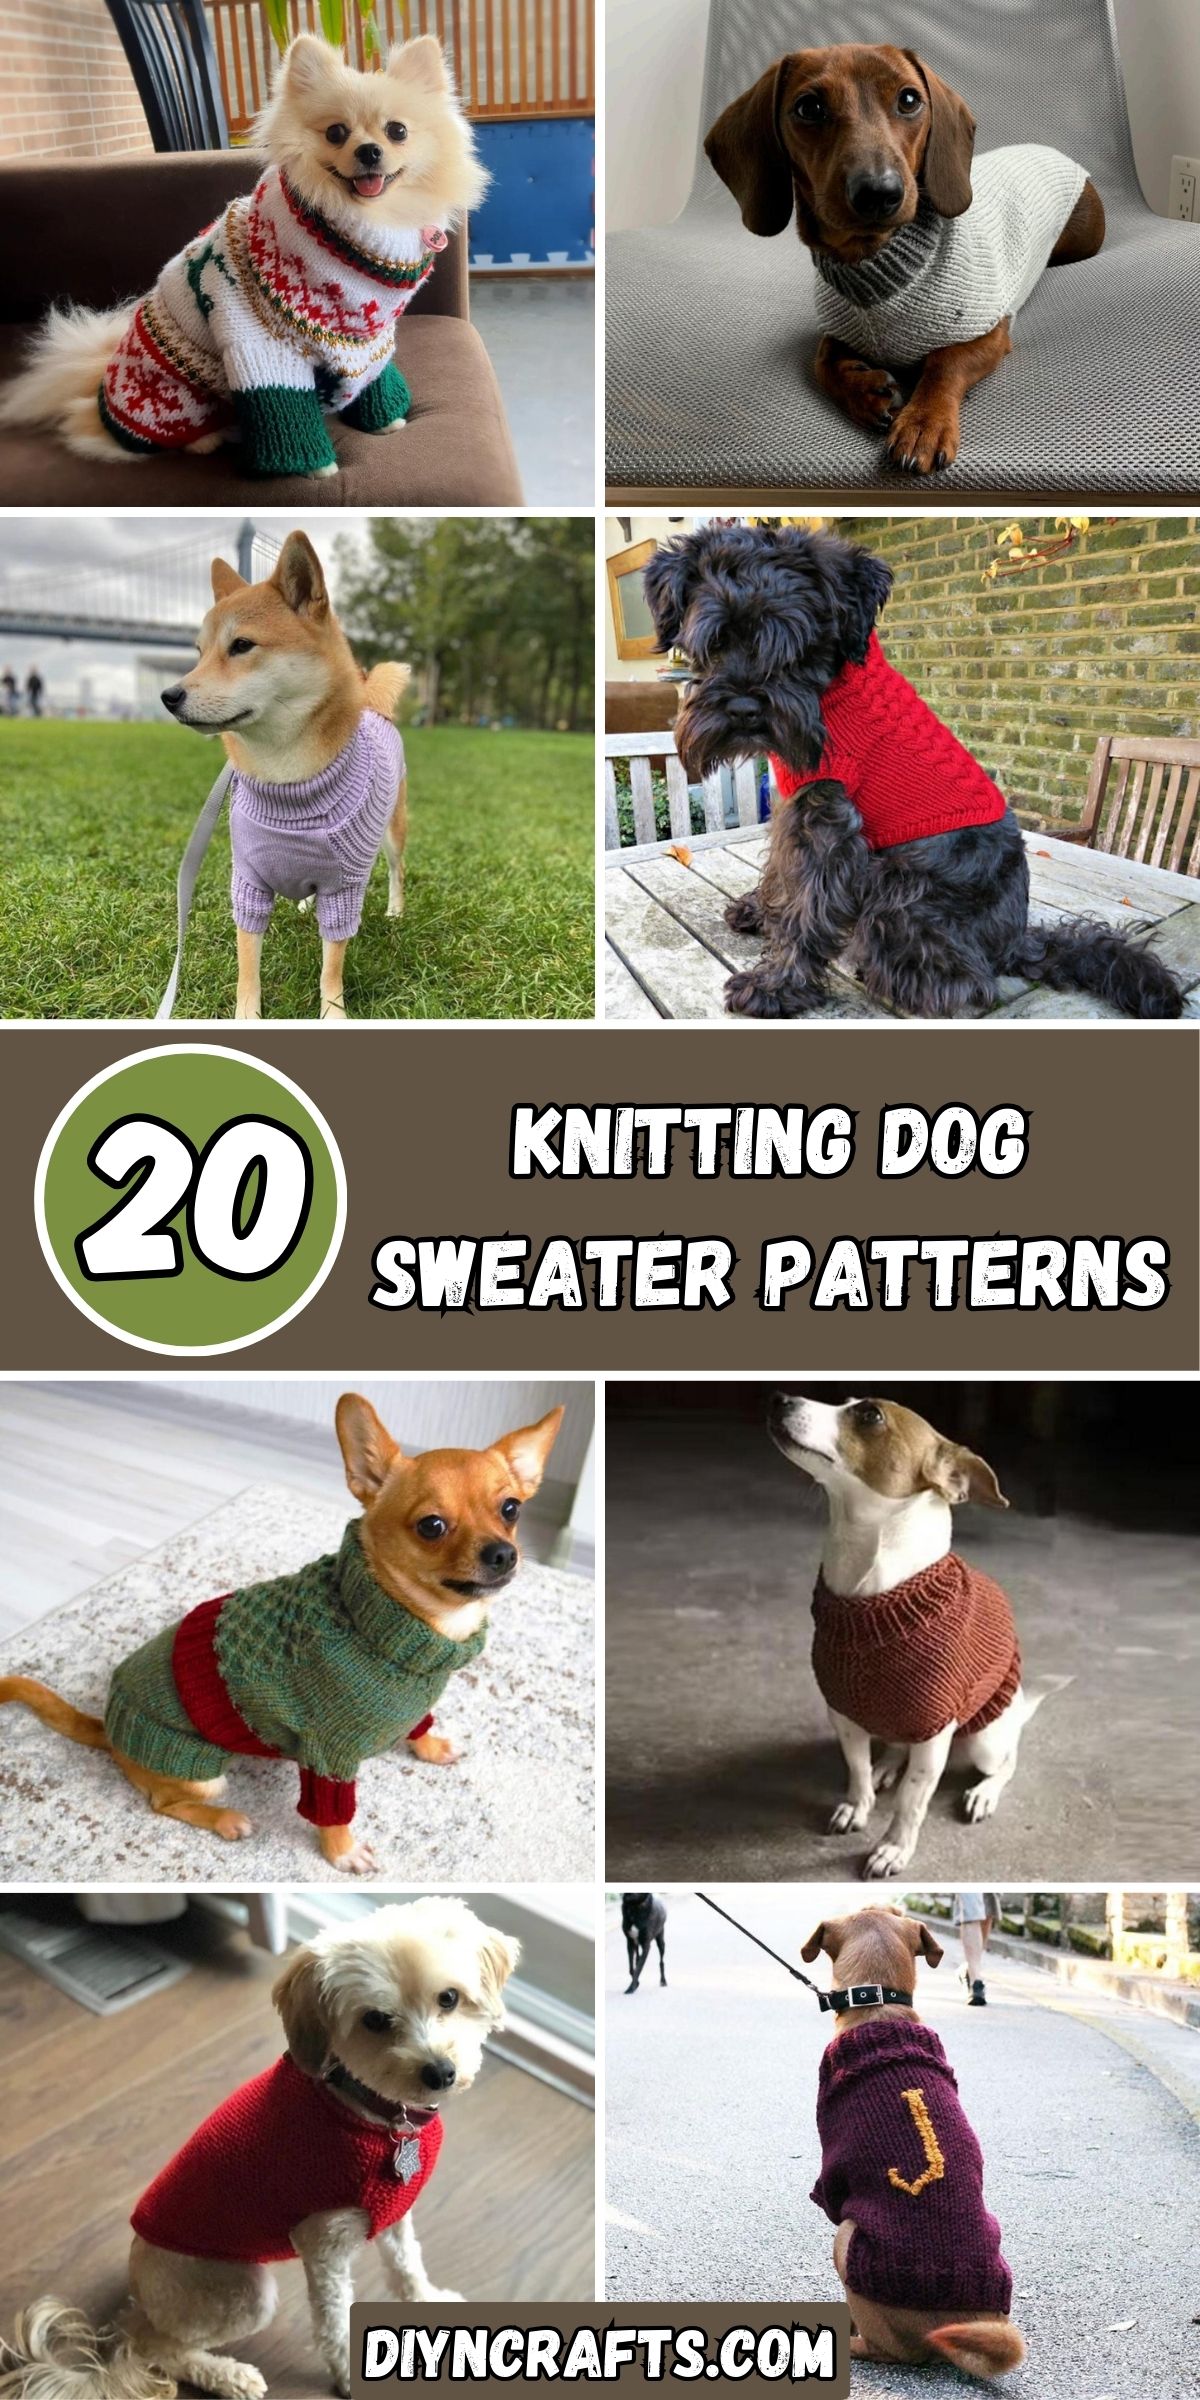 20 Knitting Dog Sweater Patterns collage.